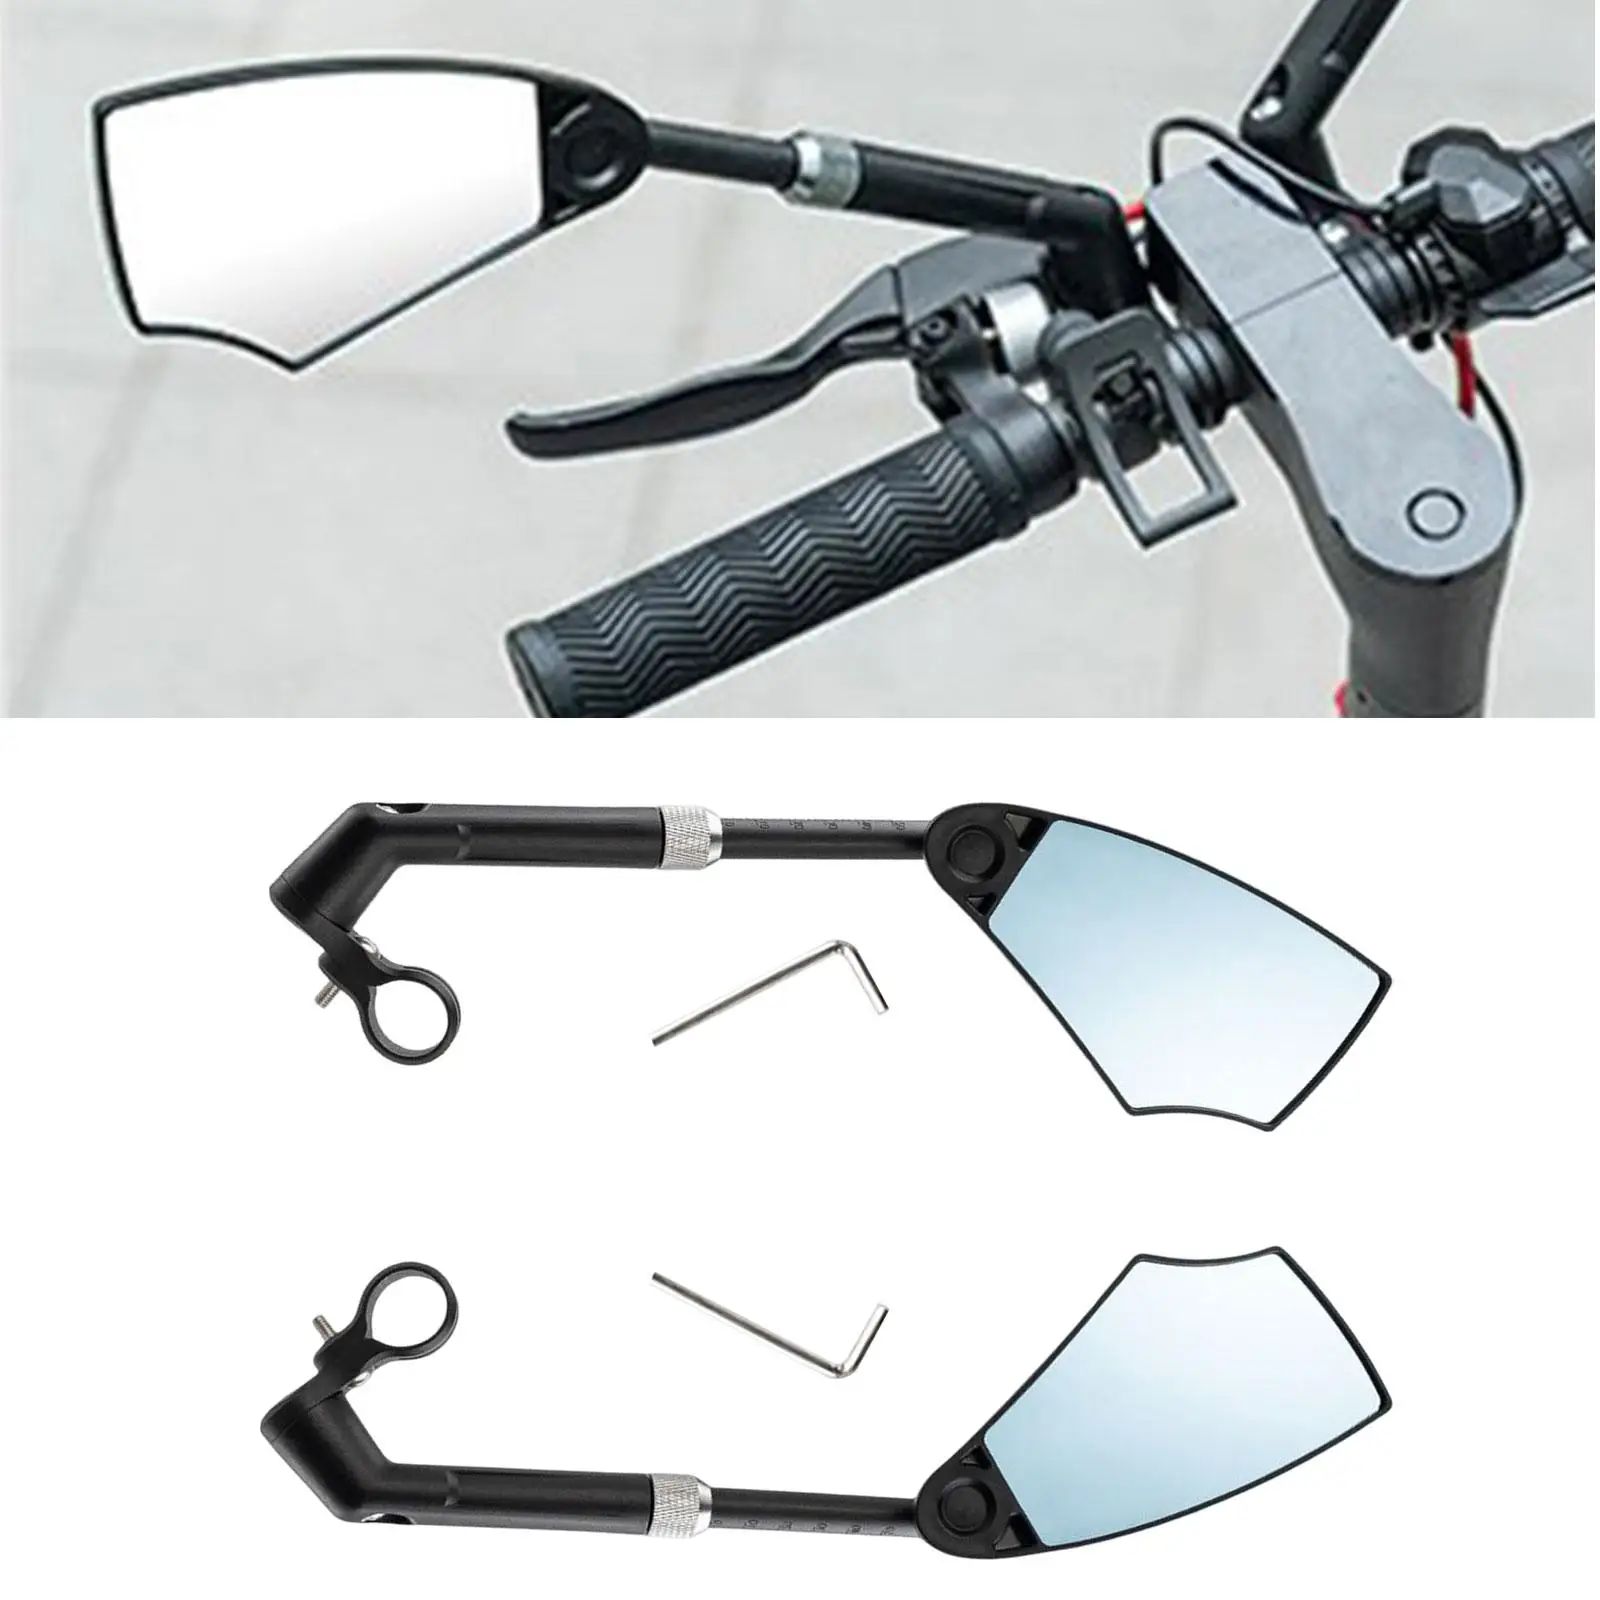 Bike Rear View Mirror Handlebar Accessories Bike Mirror Bike Rearview Mirror for Motorcycle Modification Electric Bike Adult